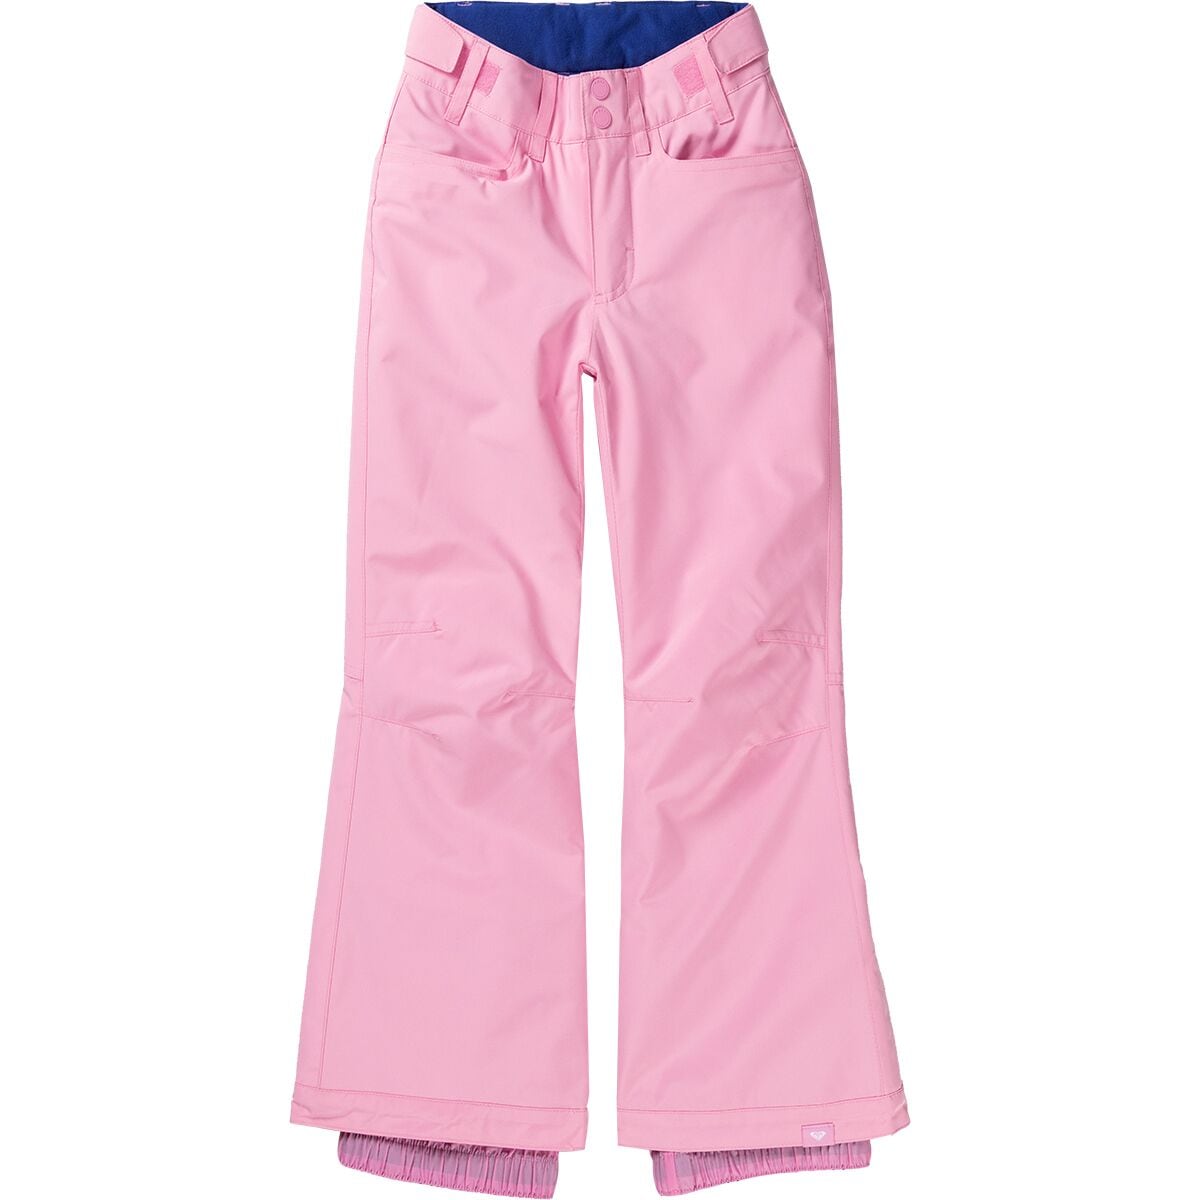 Roxy Backyard Pant - Girls' Pink Frosting